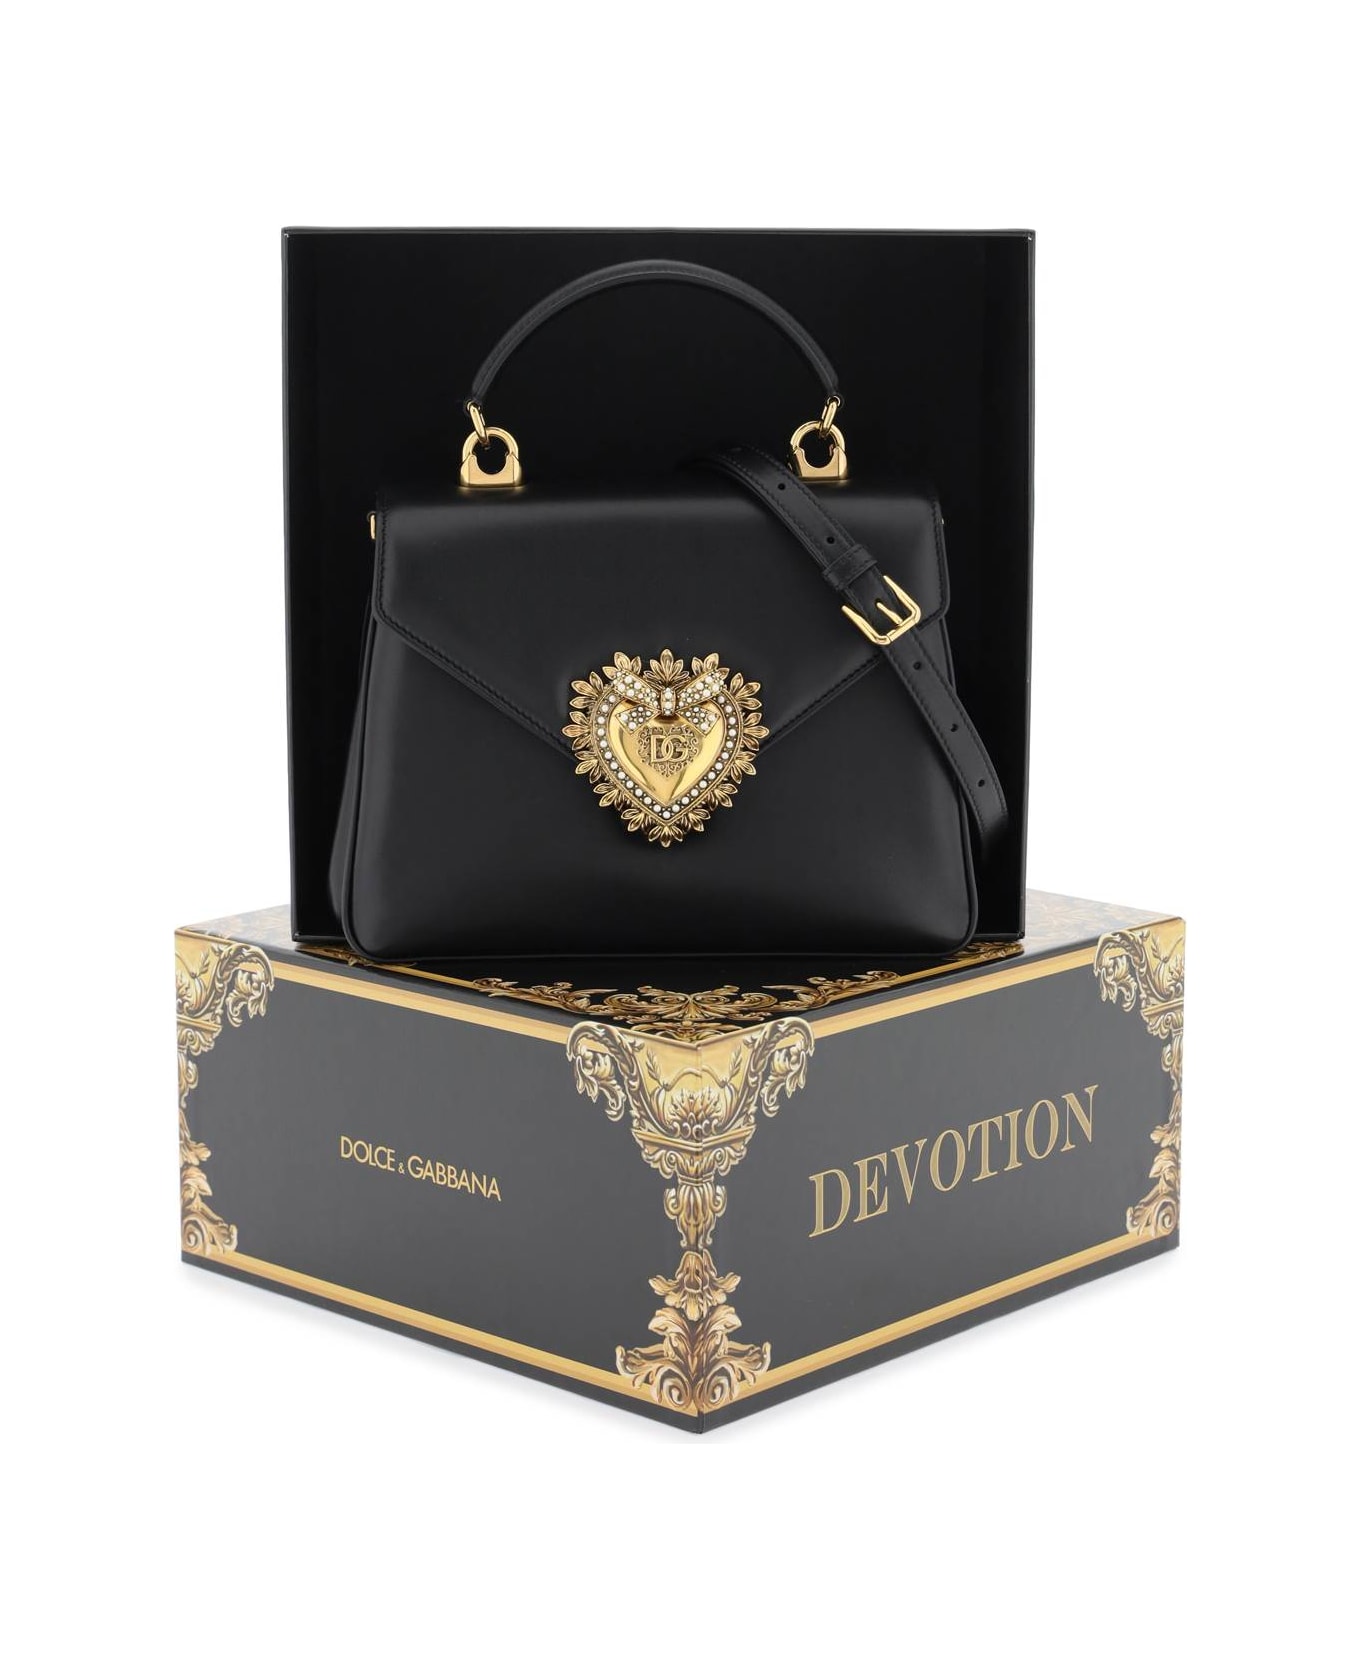 Dolce & Gabbana Devotion Handbag - NERO (Black)